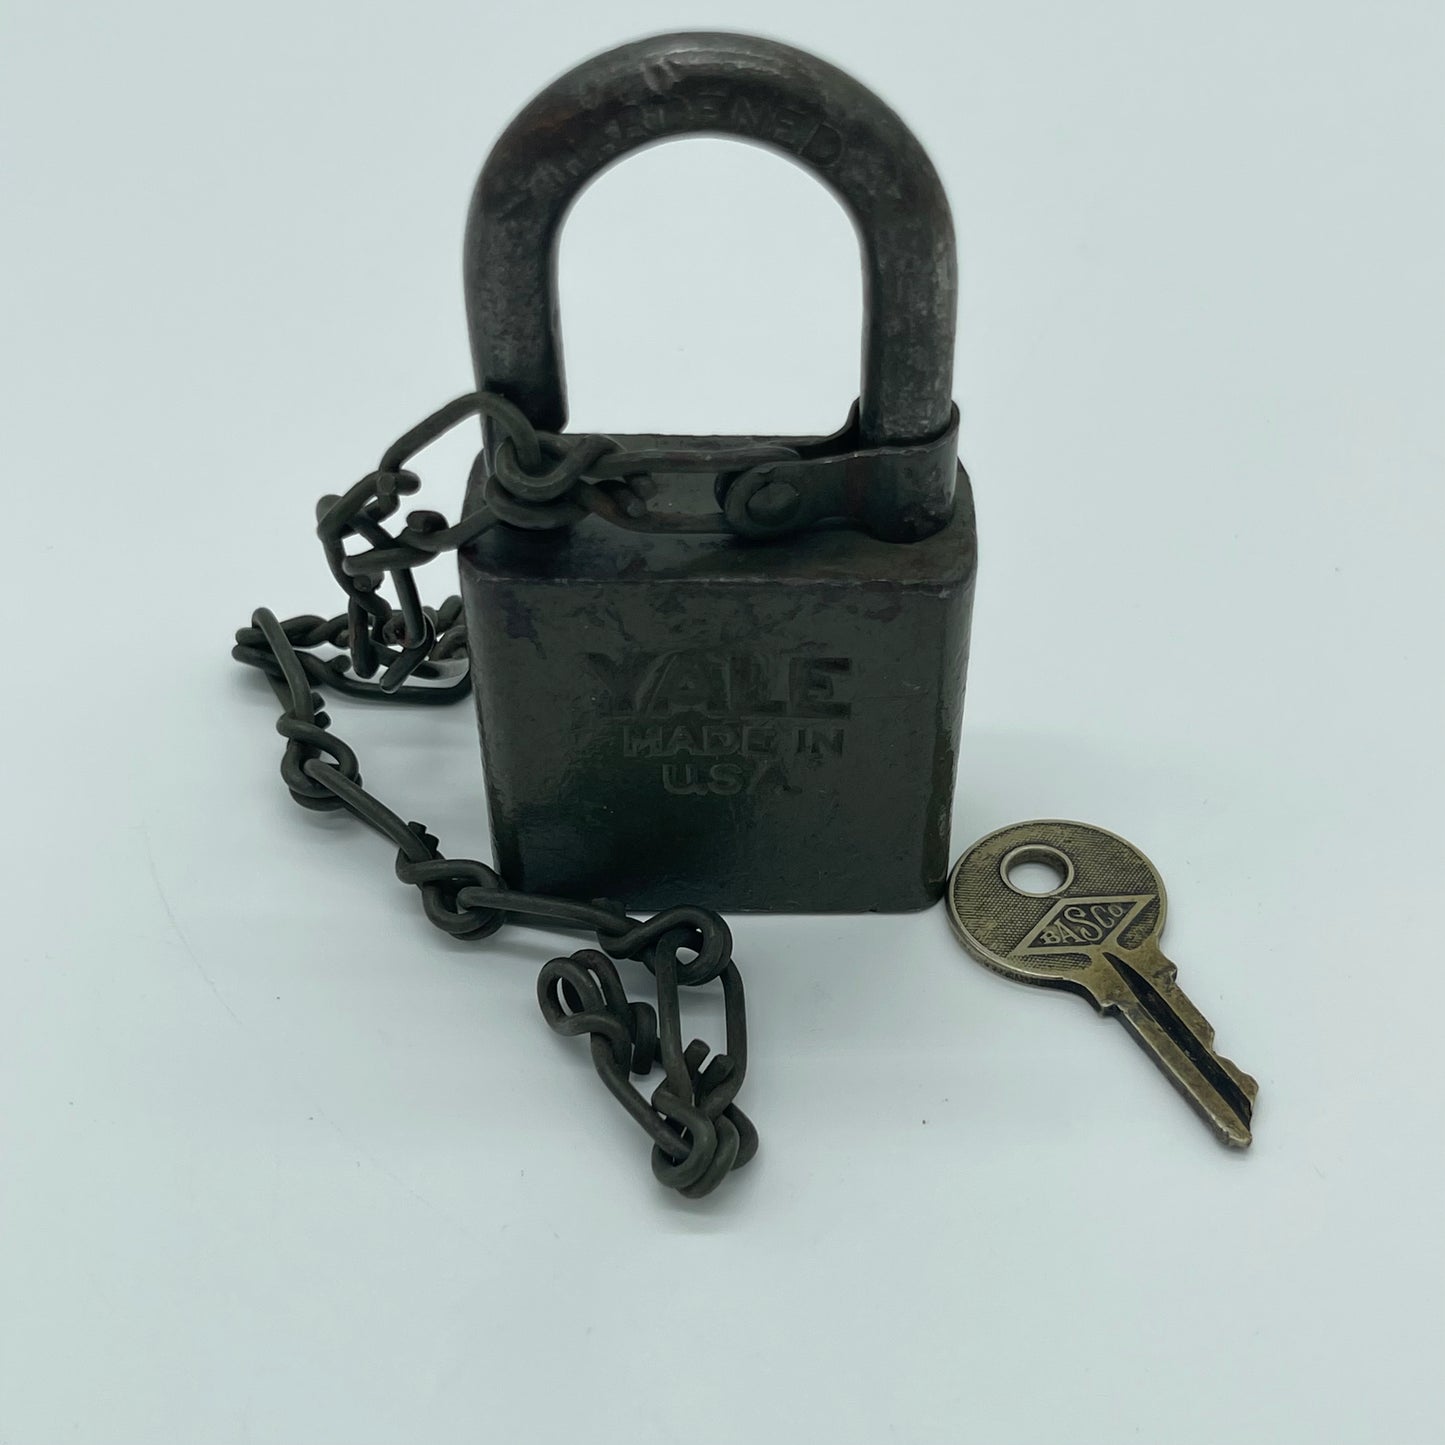 Vintage Yale Military Lock with Key (Item Number 0015)